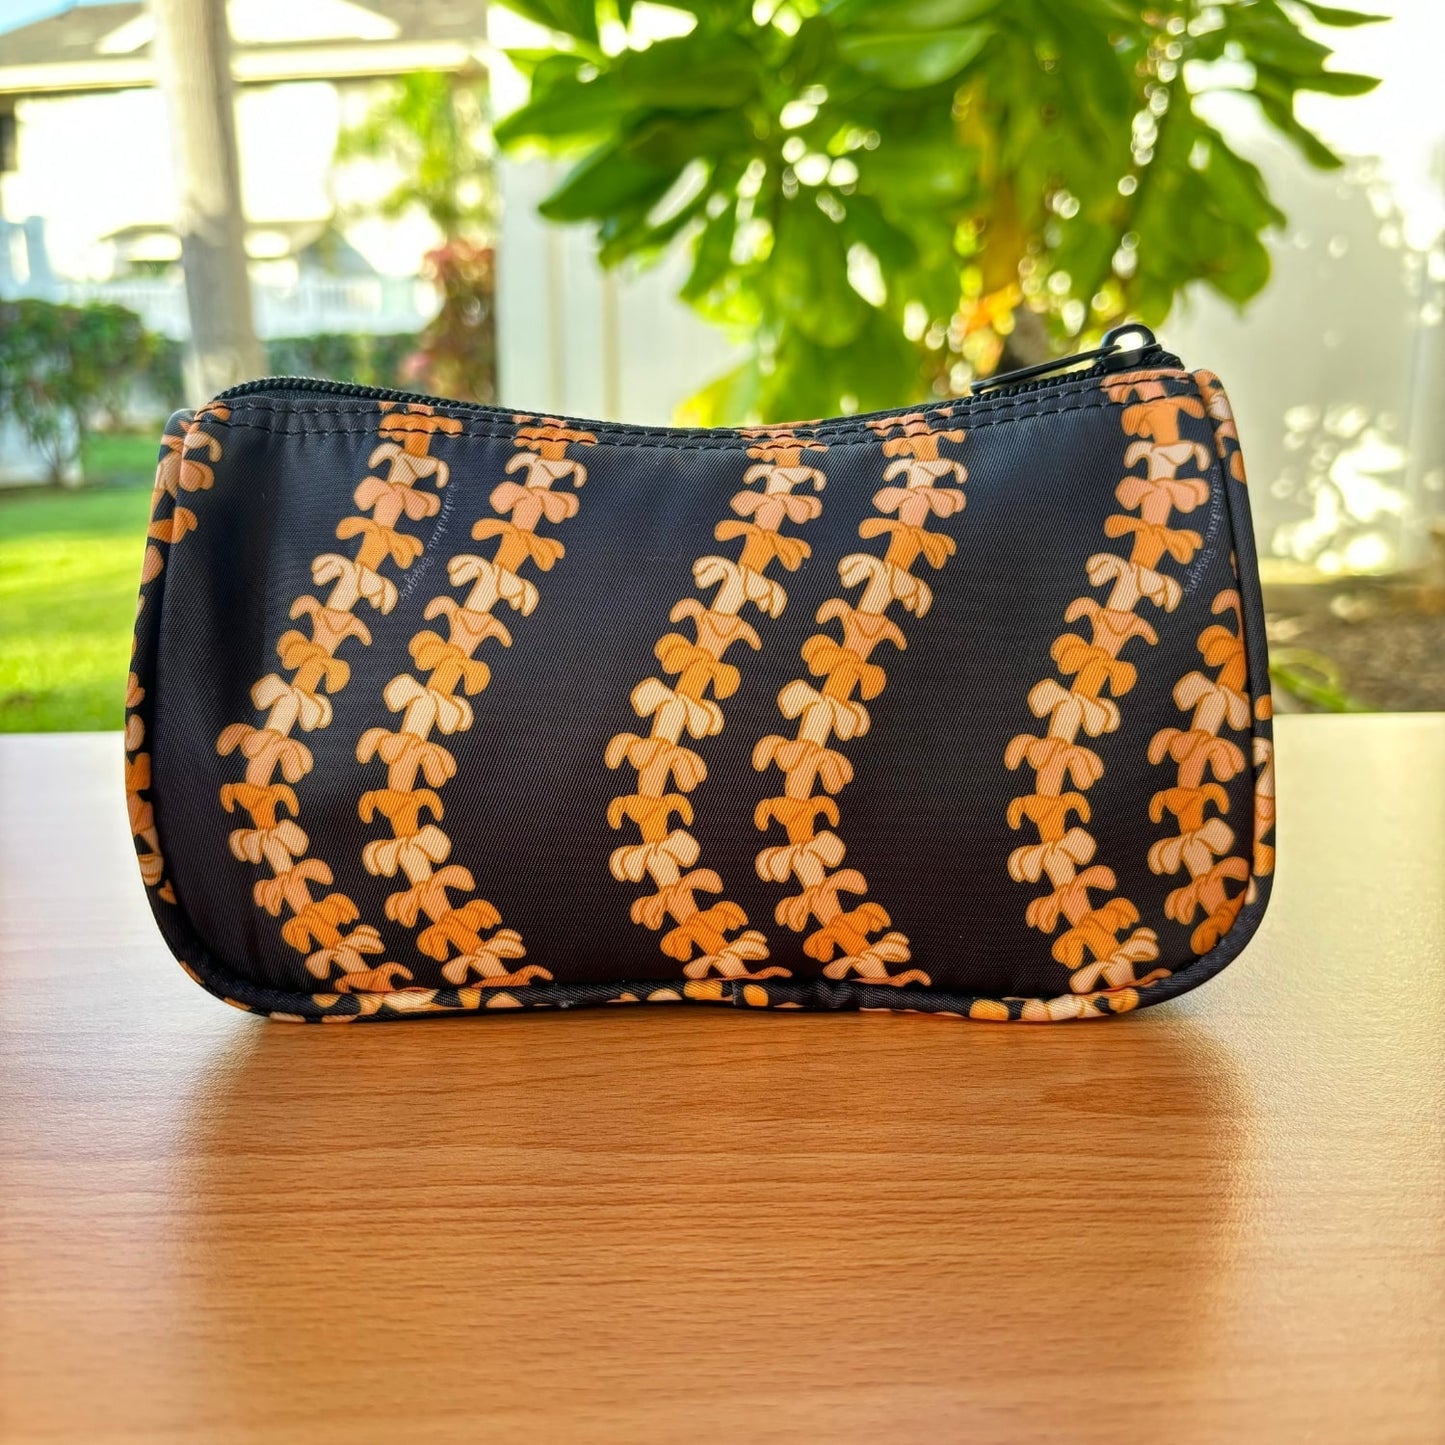 Mini Zipper Pouch - make-up bag, clutch, wristlet, with puakenikeni lei design from Puakenikeni Designs back view